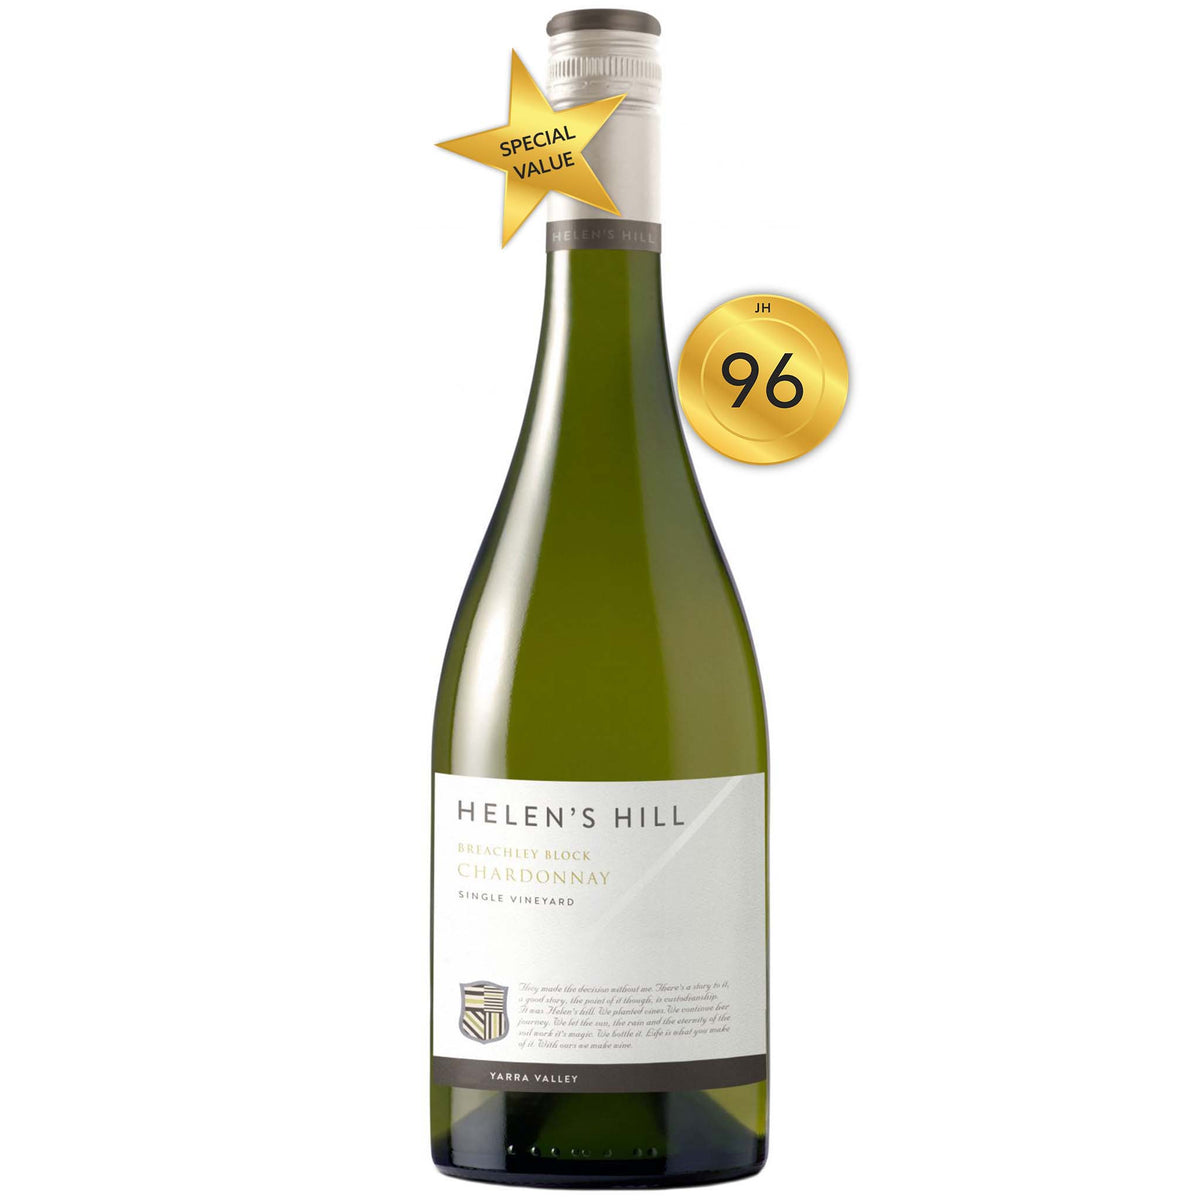 Helen's Hill Estate Breachley Block Single Vineyard Chardonnay 2020